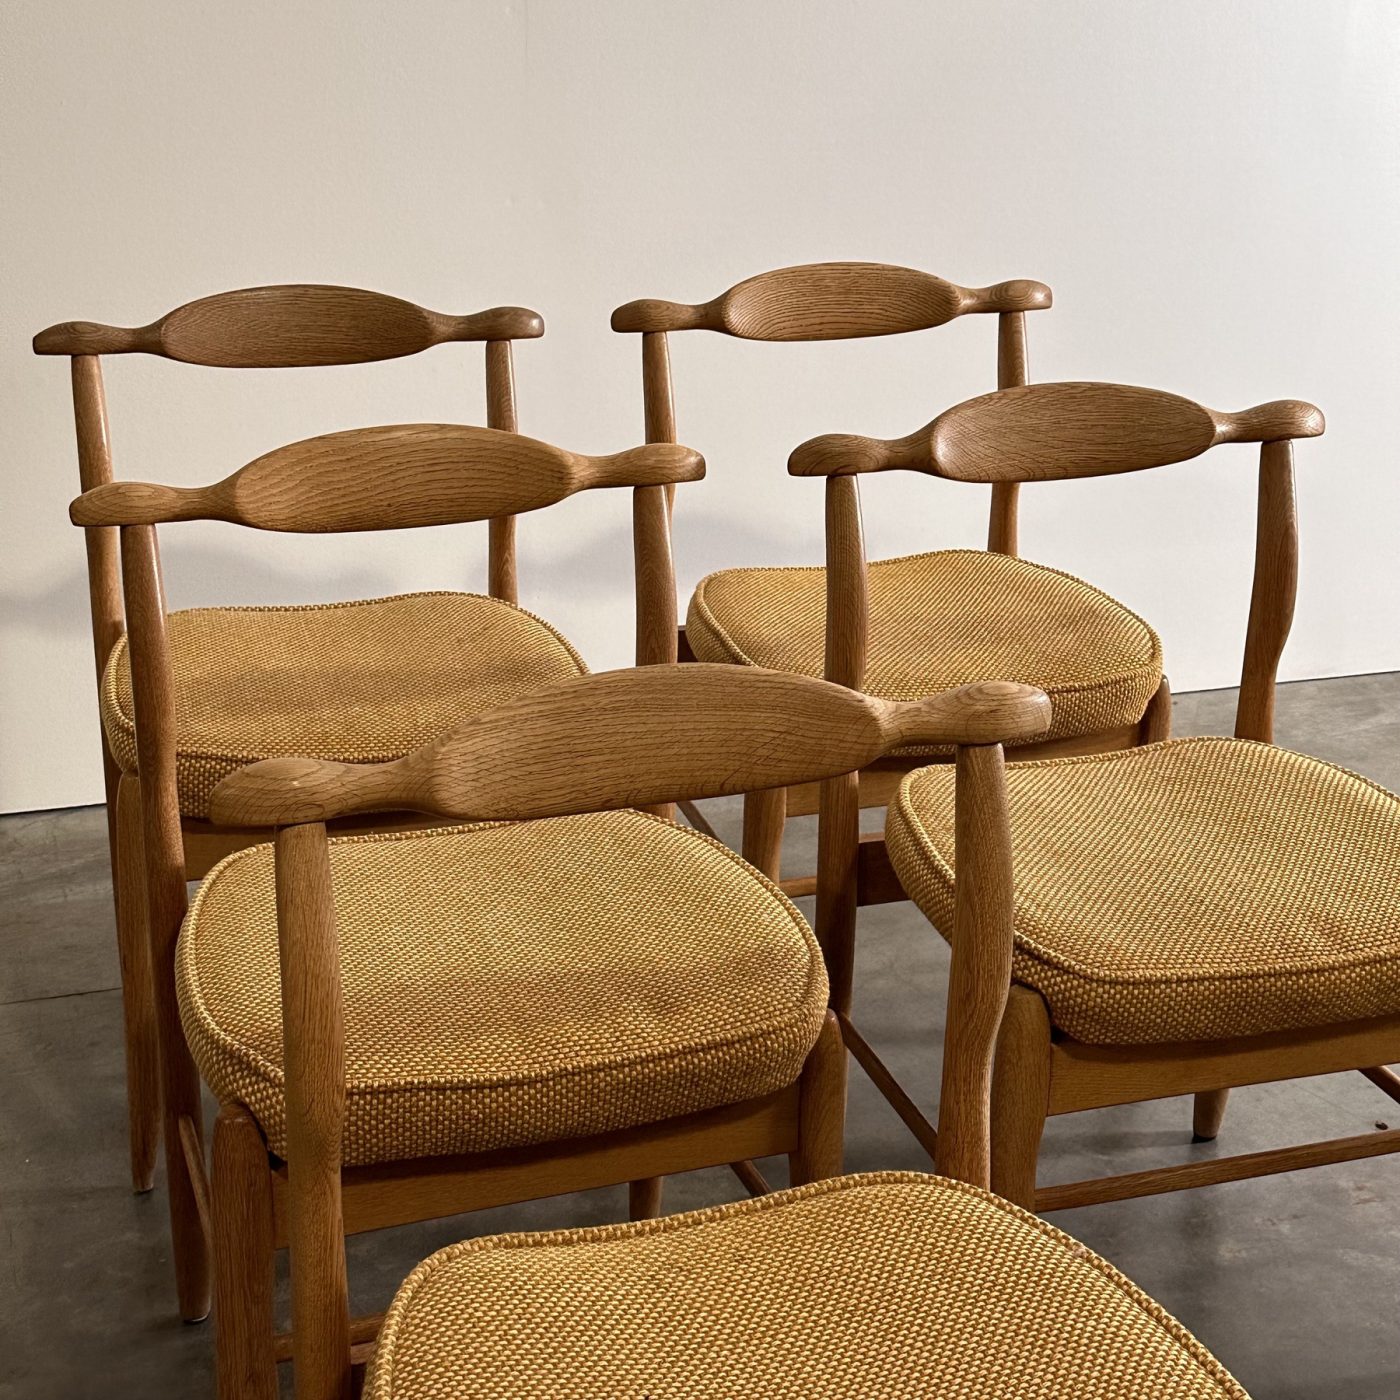 objet-vagabond-midcentury-chairs0007